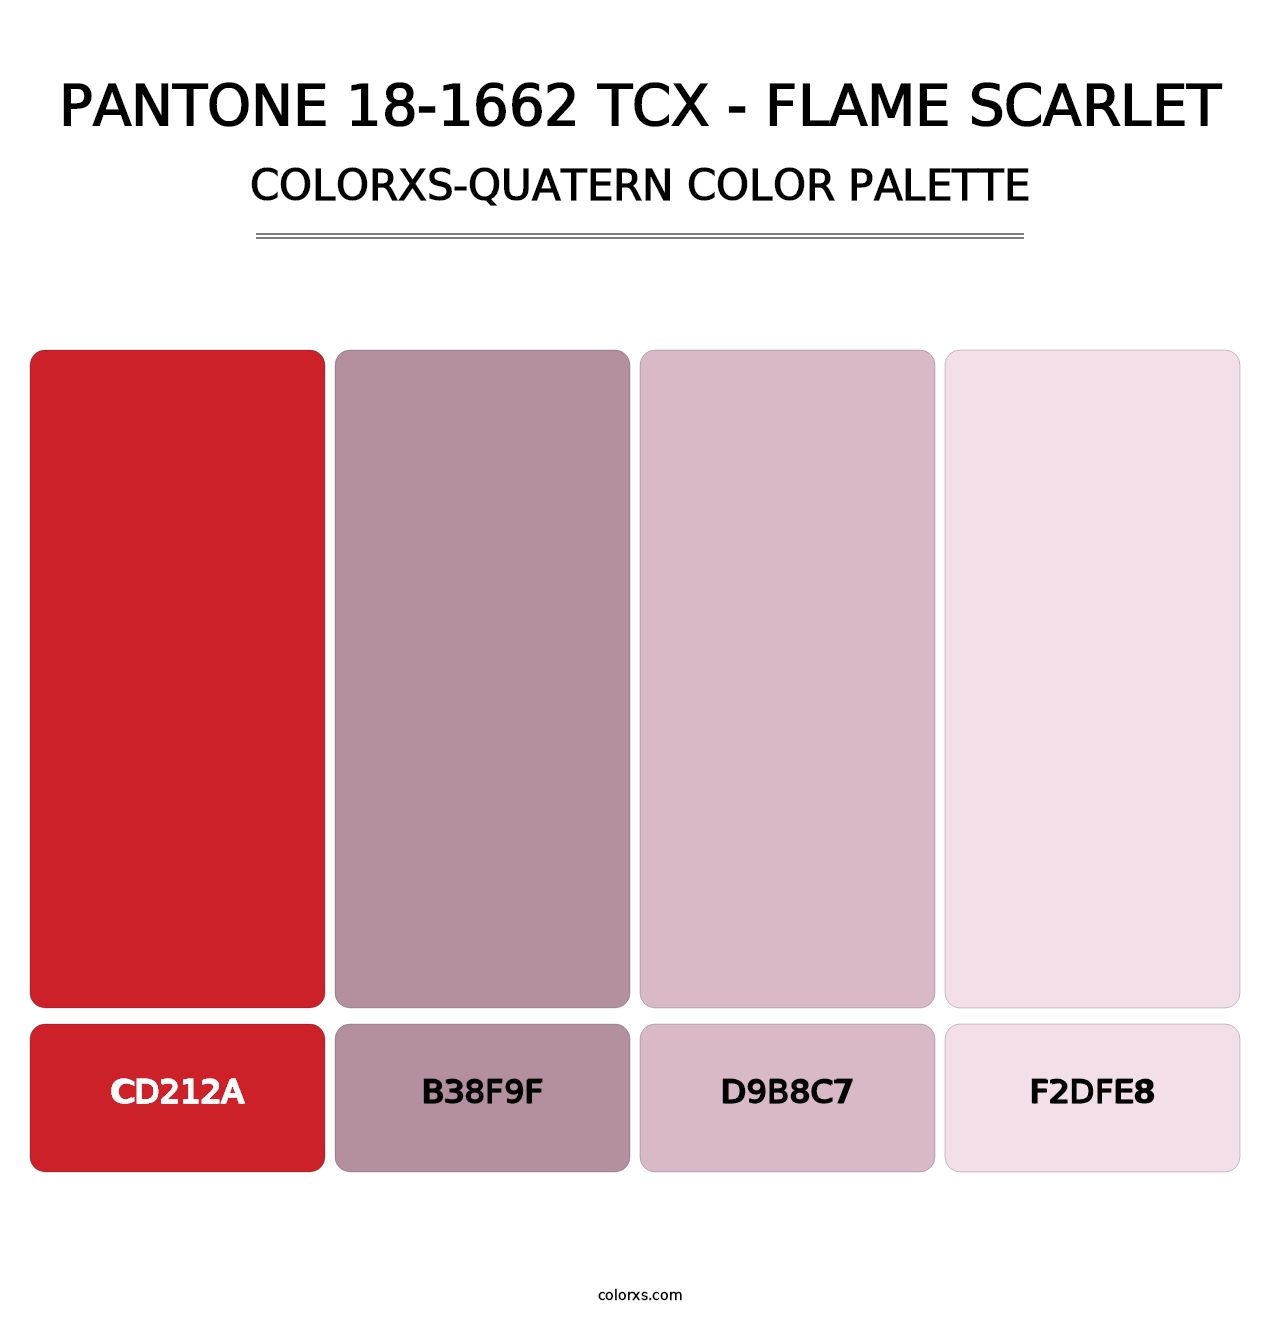 PANTONE 18-1662 TCX - Flame Scarlet - Colorxs Quatern Palette